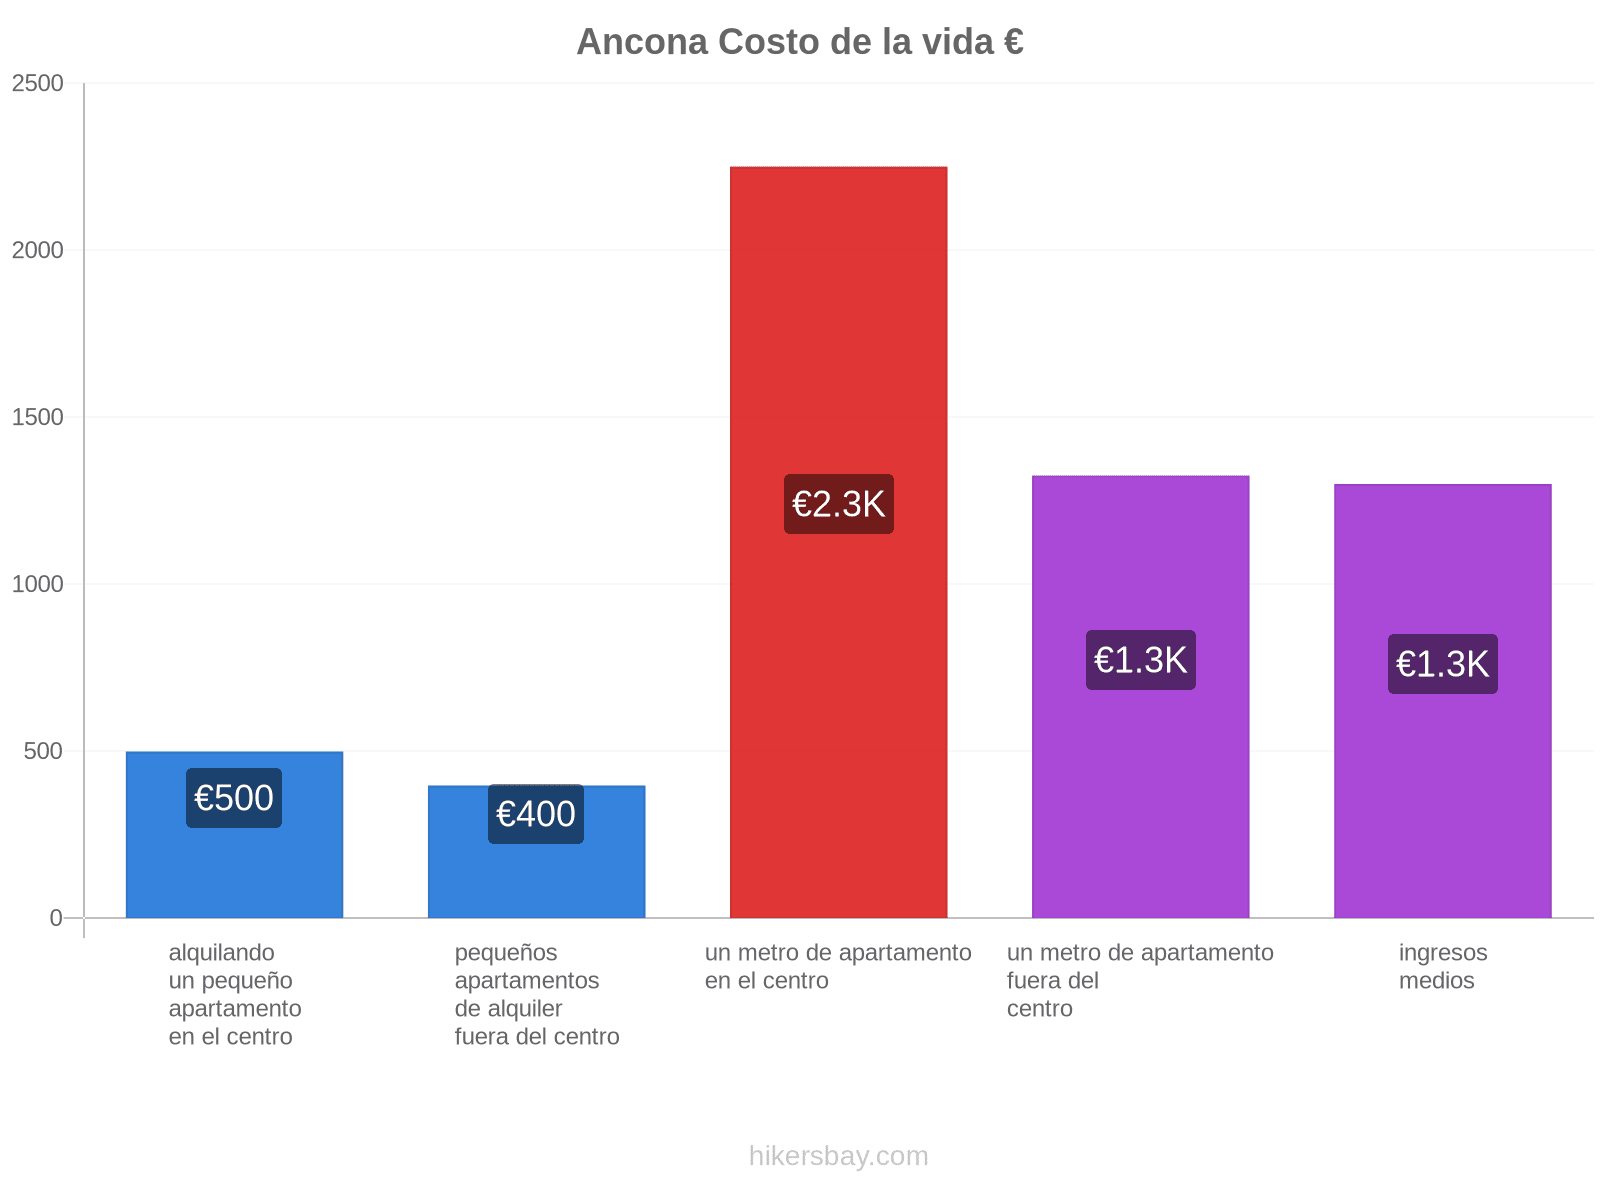 Ancona costo de la vida hikersbay.com